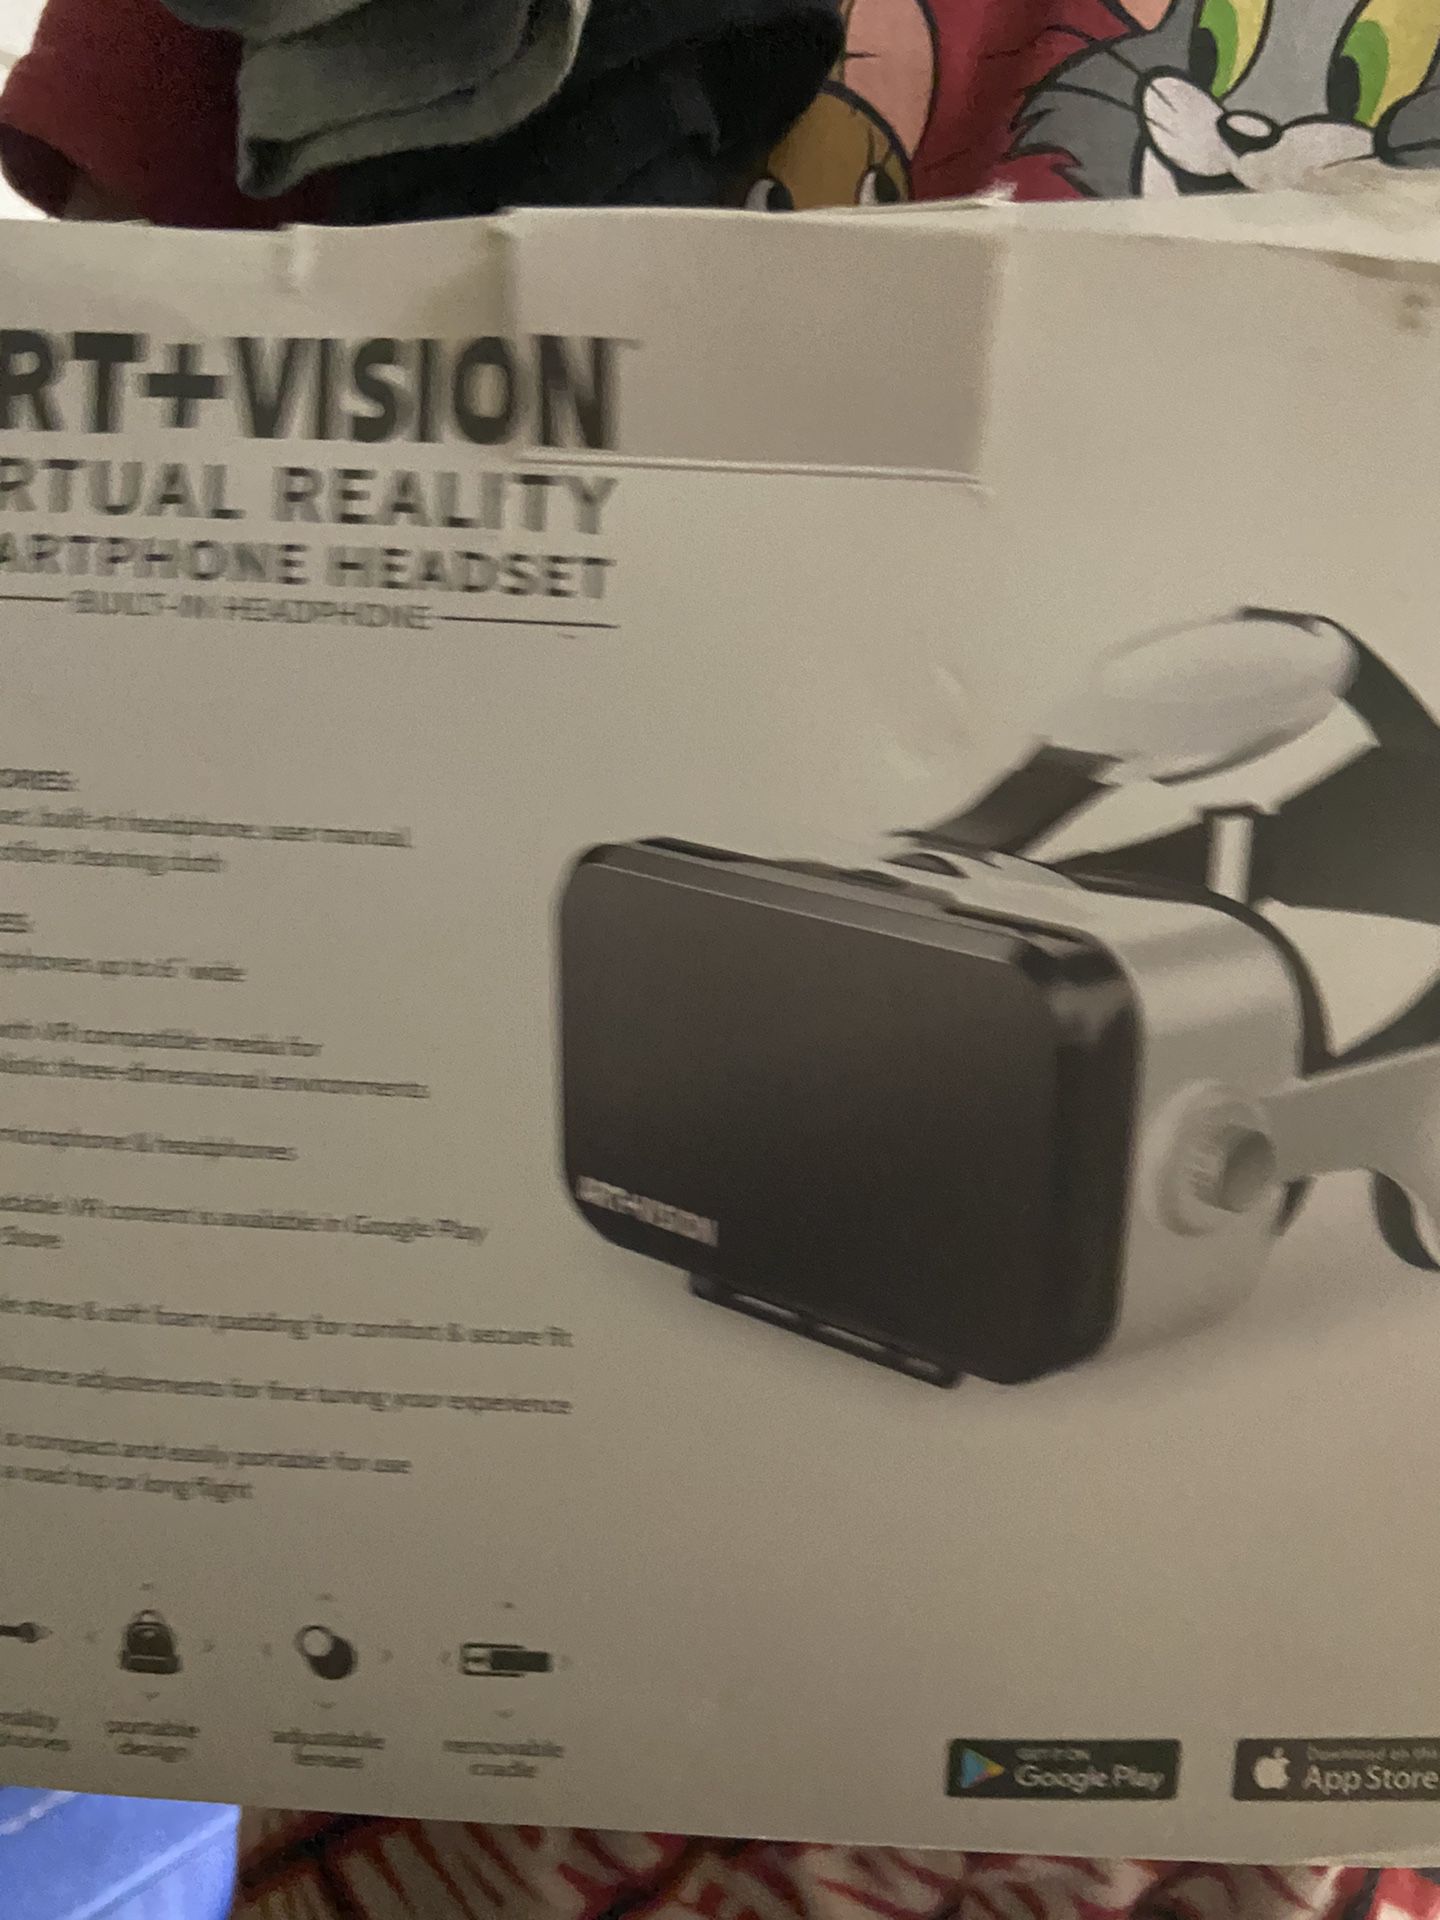 Art +Vision Virtual reality device